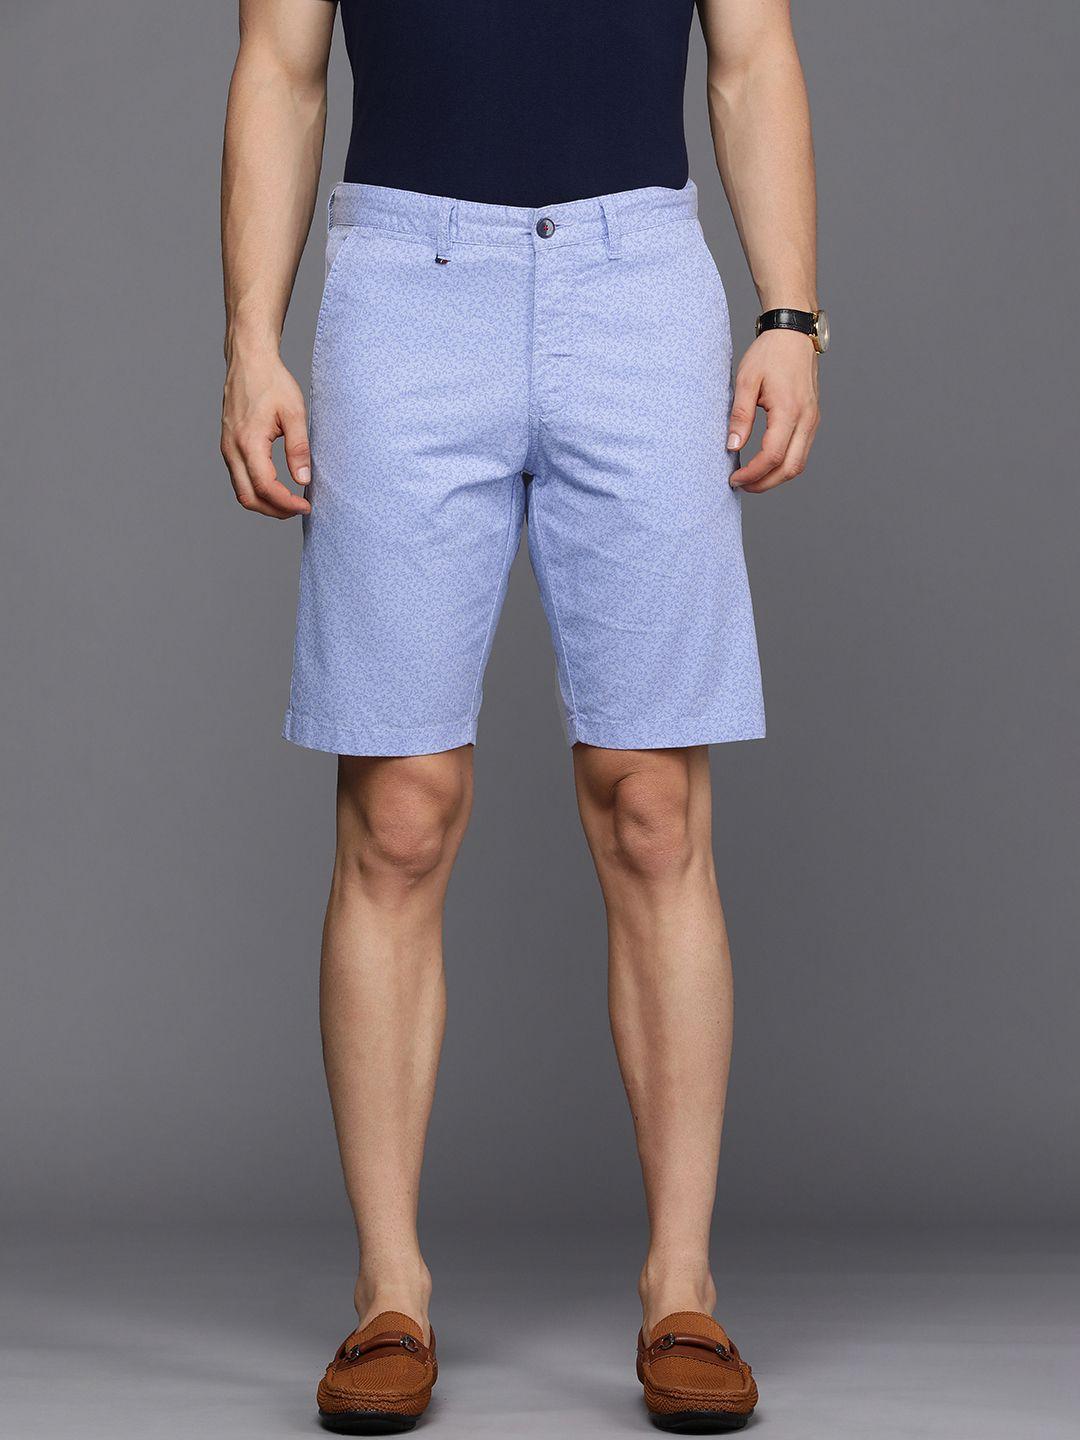 louis-philippe-sport-men-blue-floral-print-slim-fit-chino-shorts